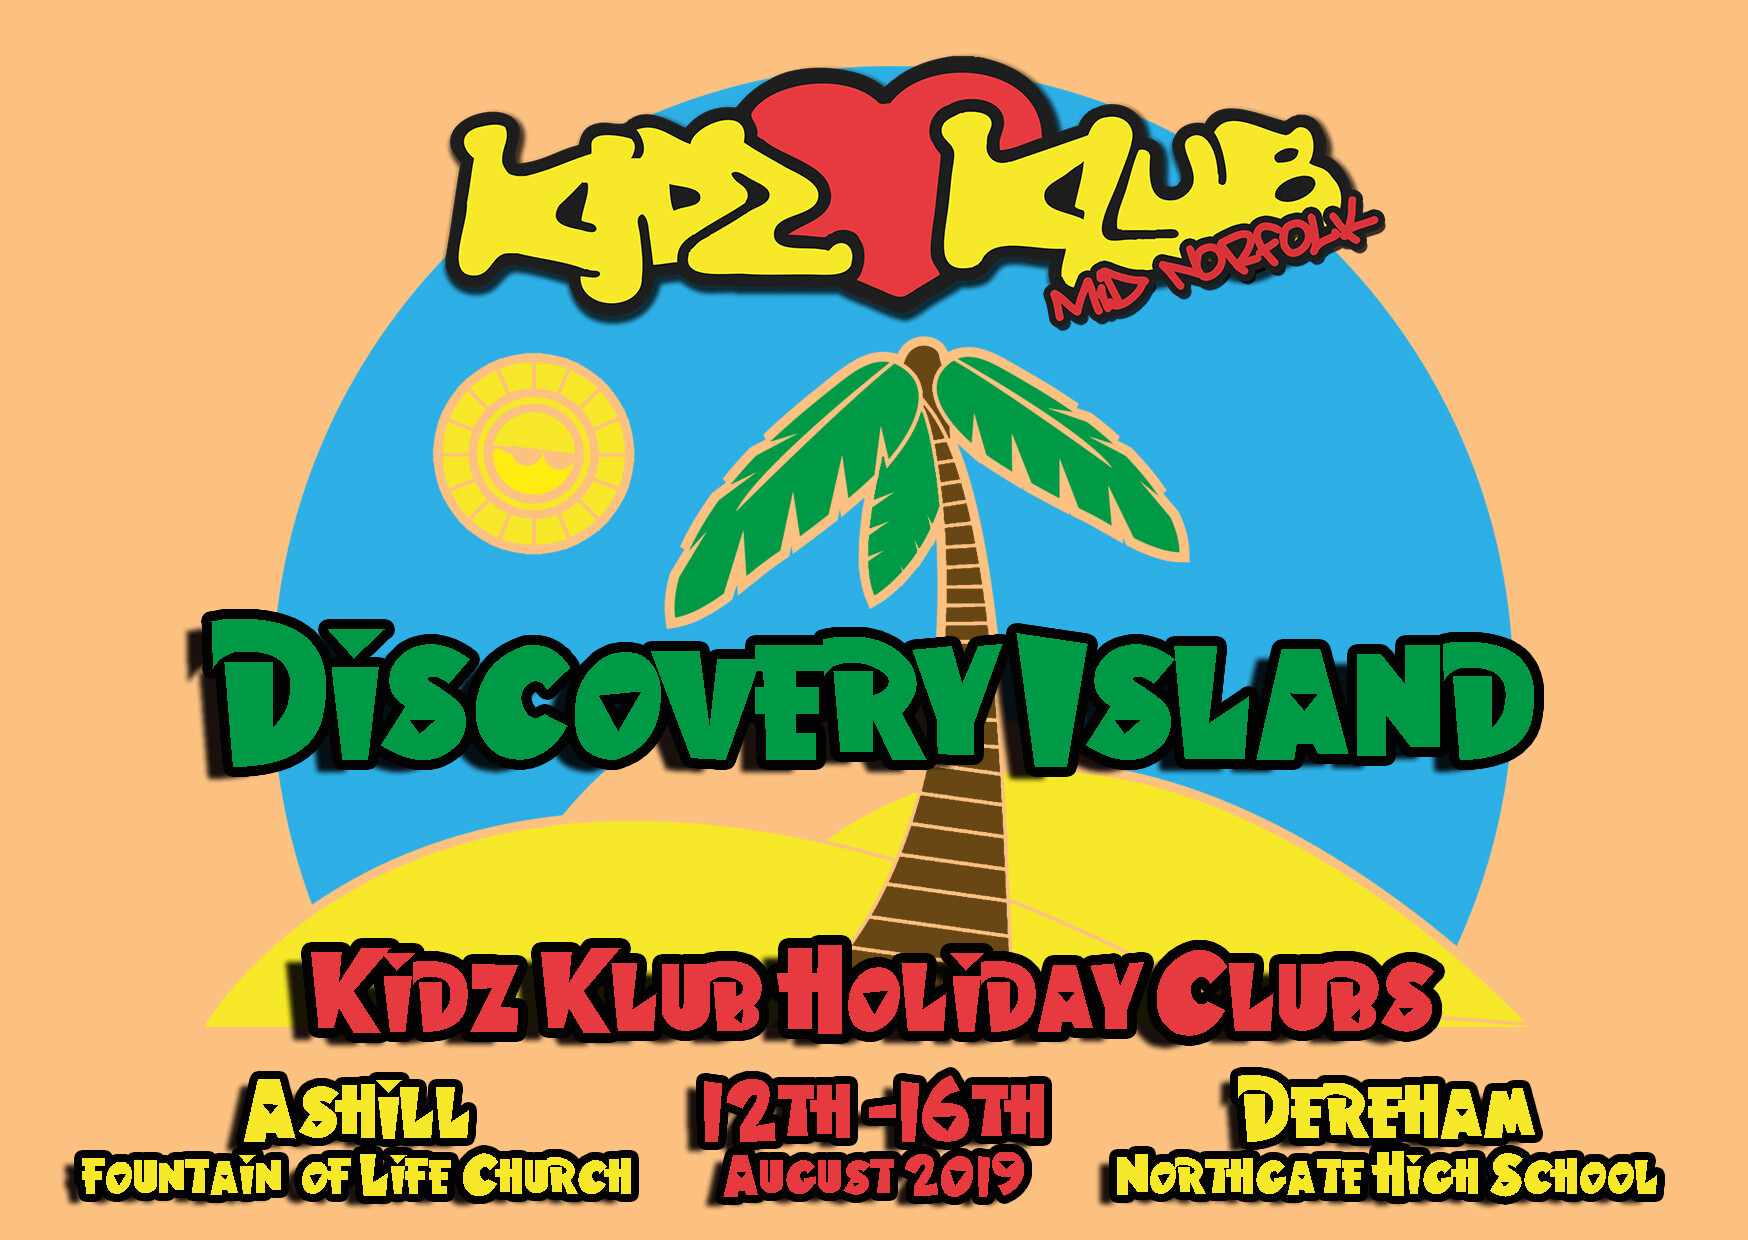 Discovery Island Holiday Club